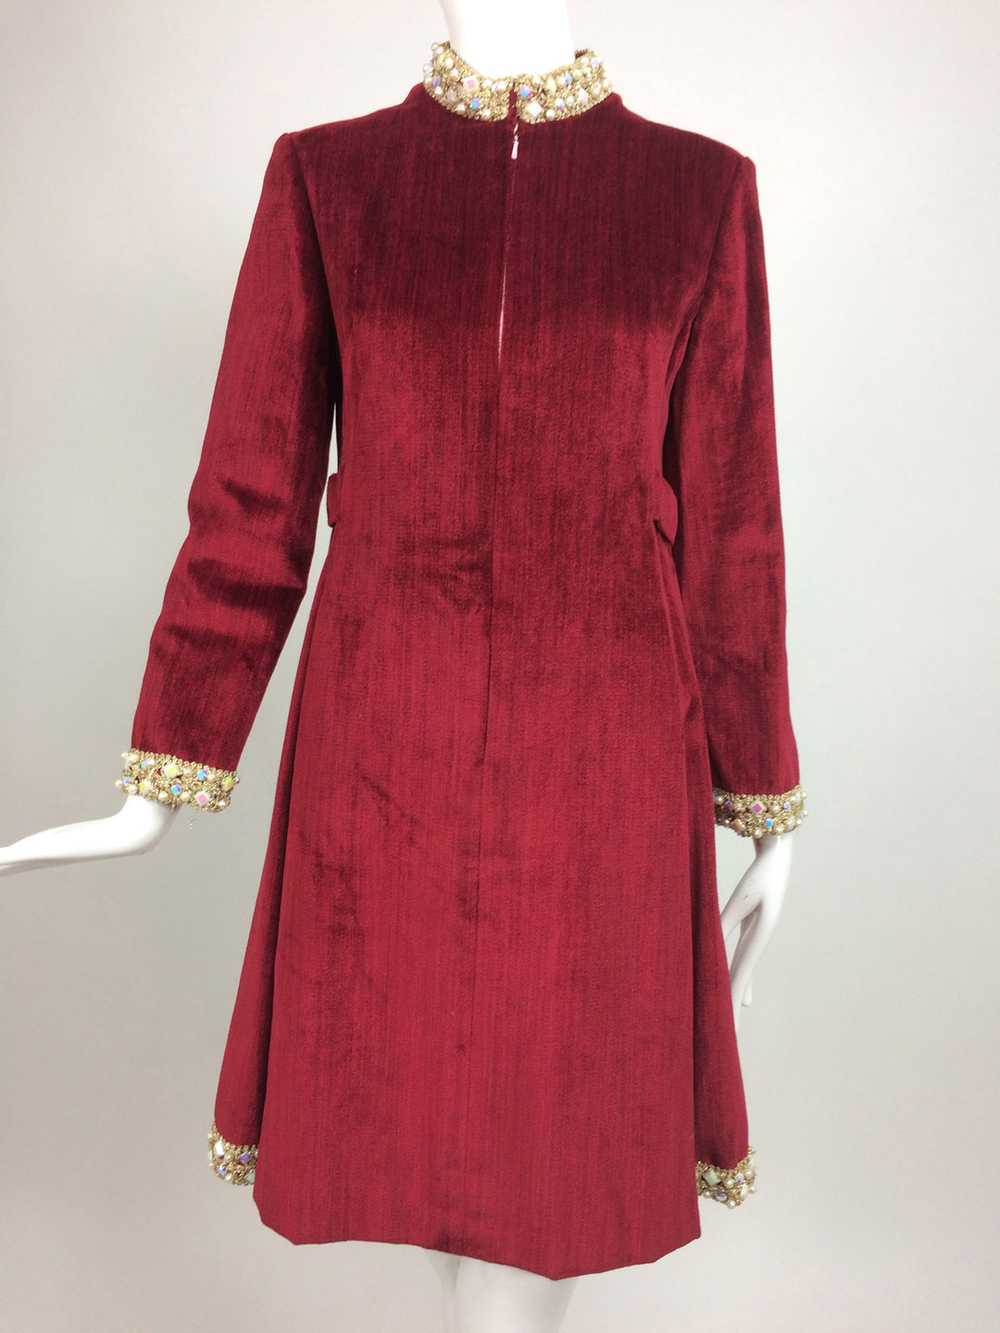 Garnet Red Silky Cotton Velvet Jewel Trim Mod Dre… - image 8